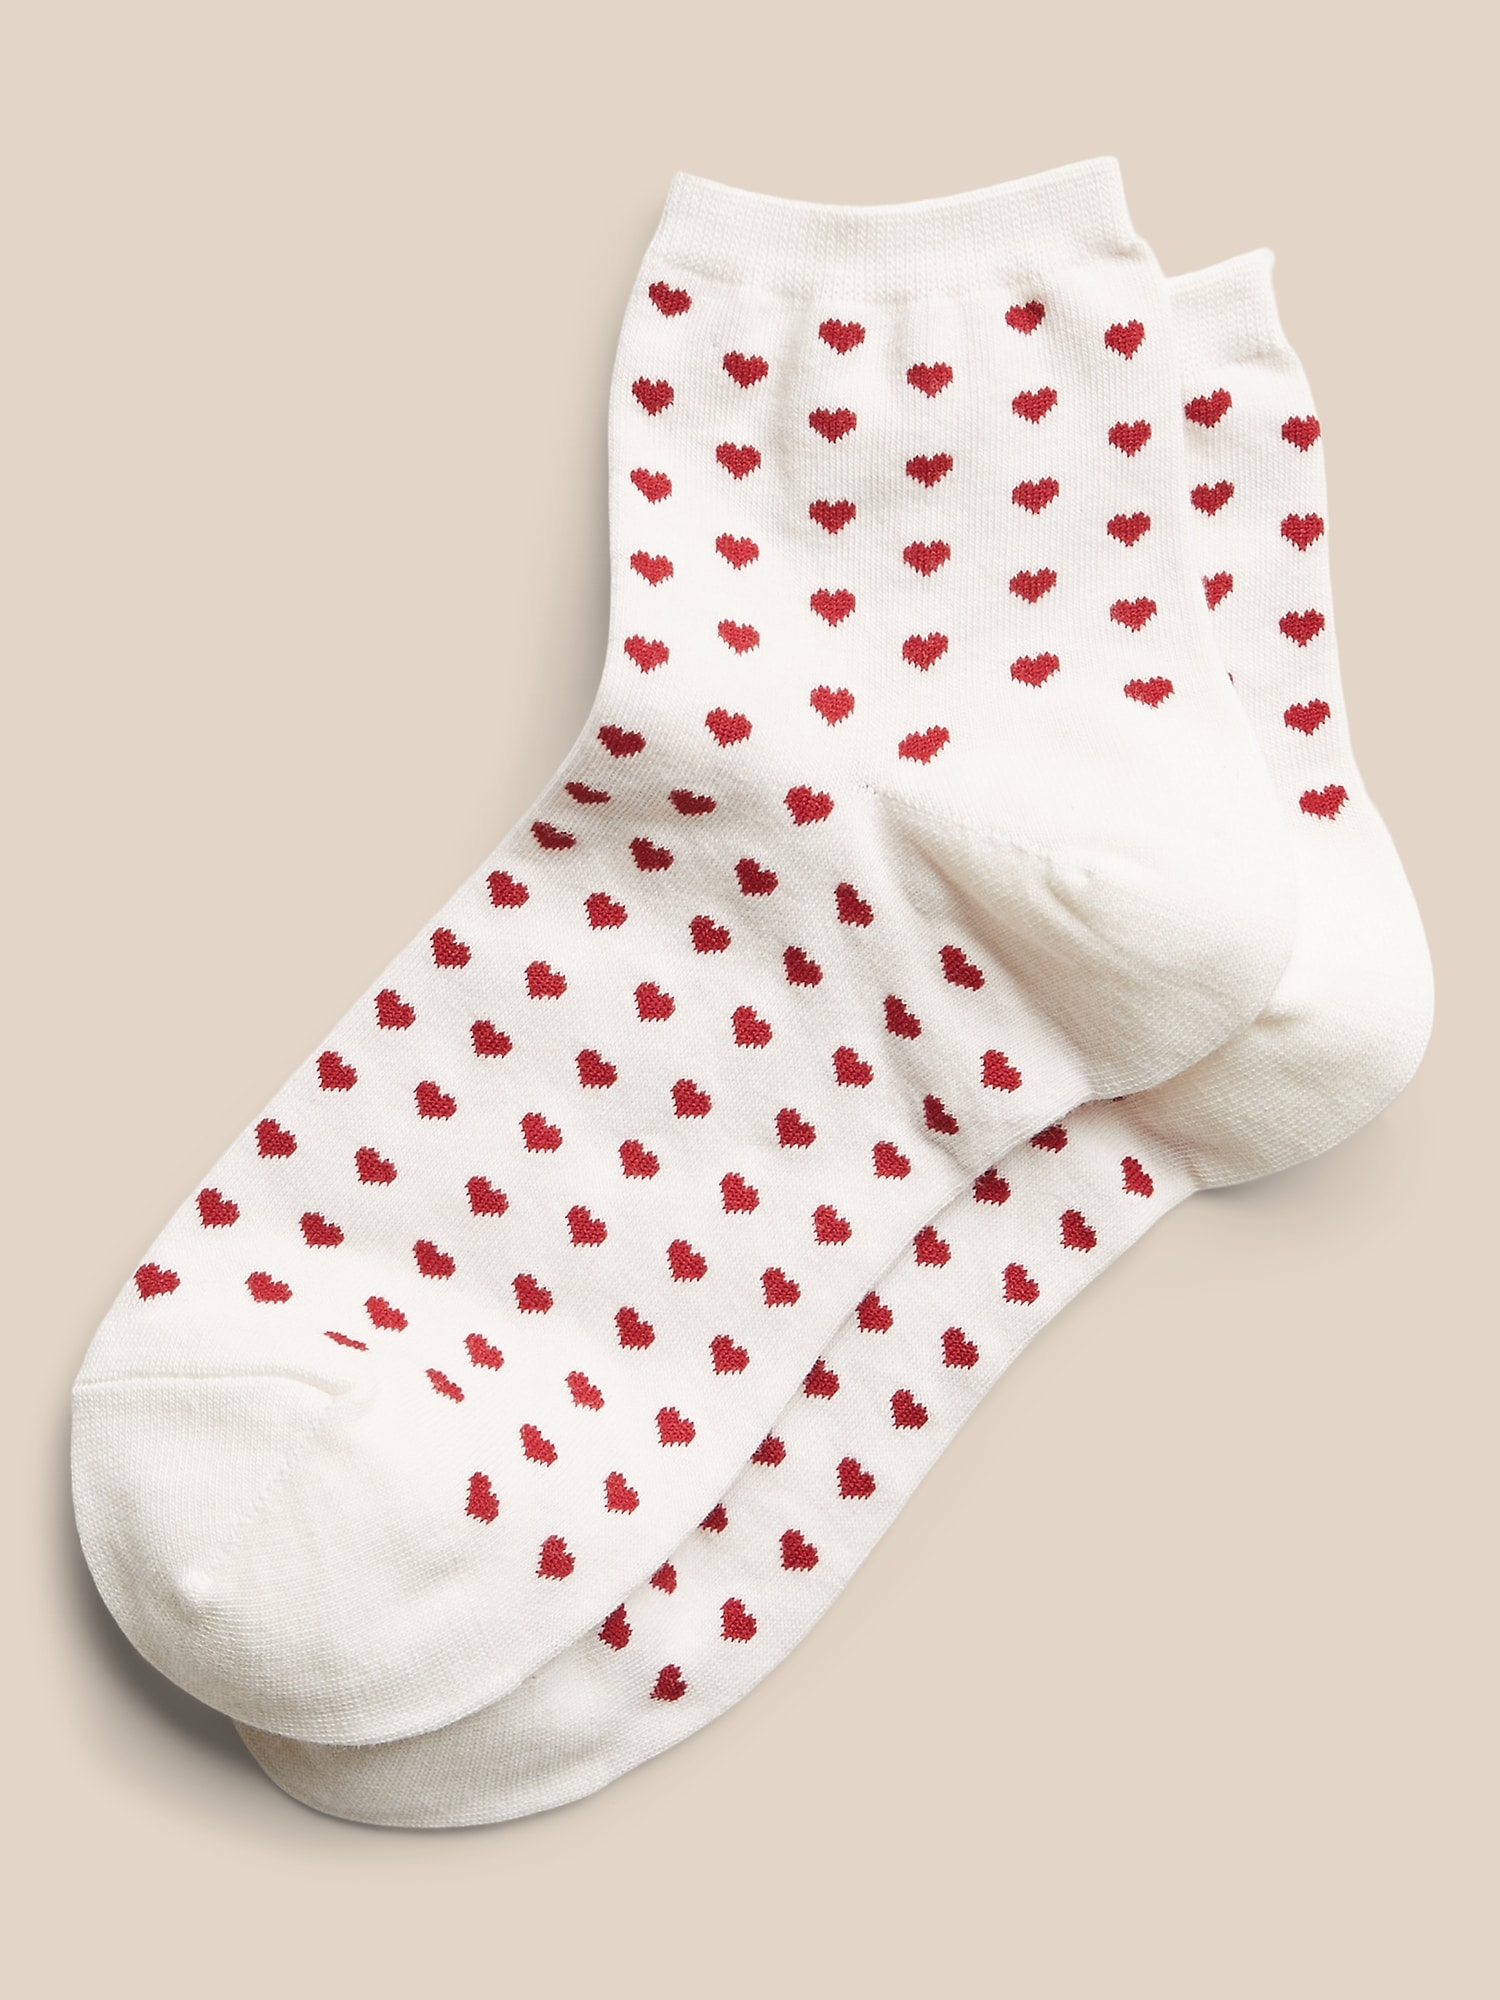 Heart Ankle Socks | Banana Republic Factory